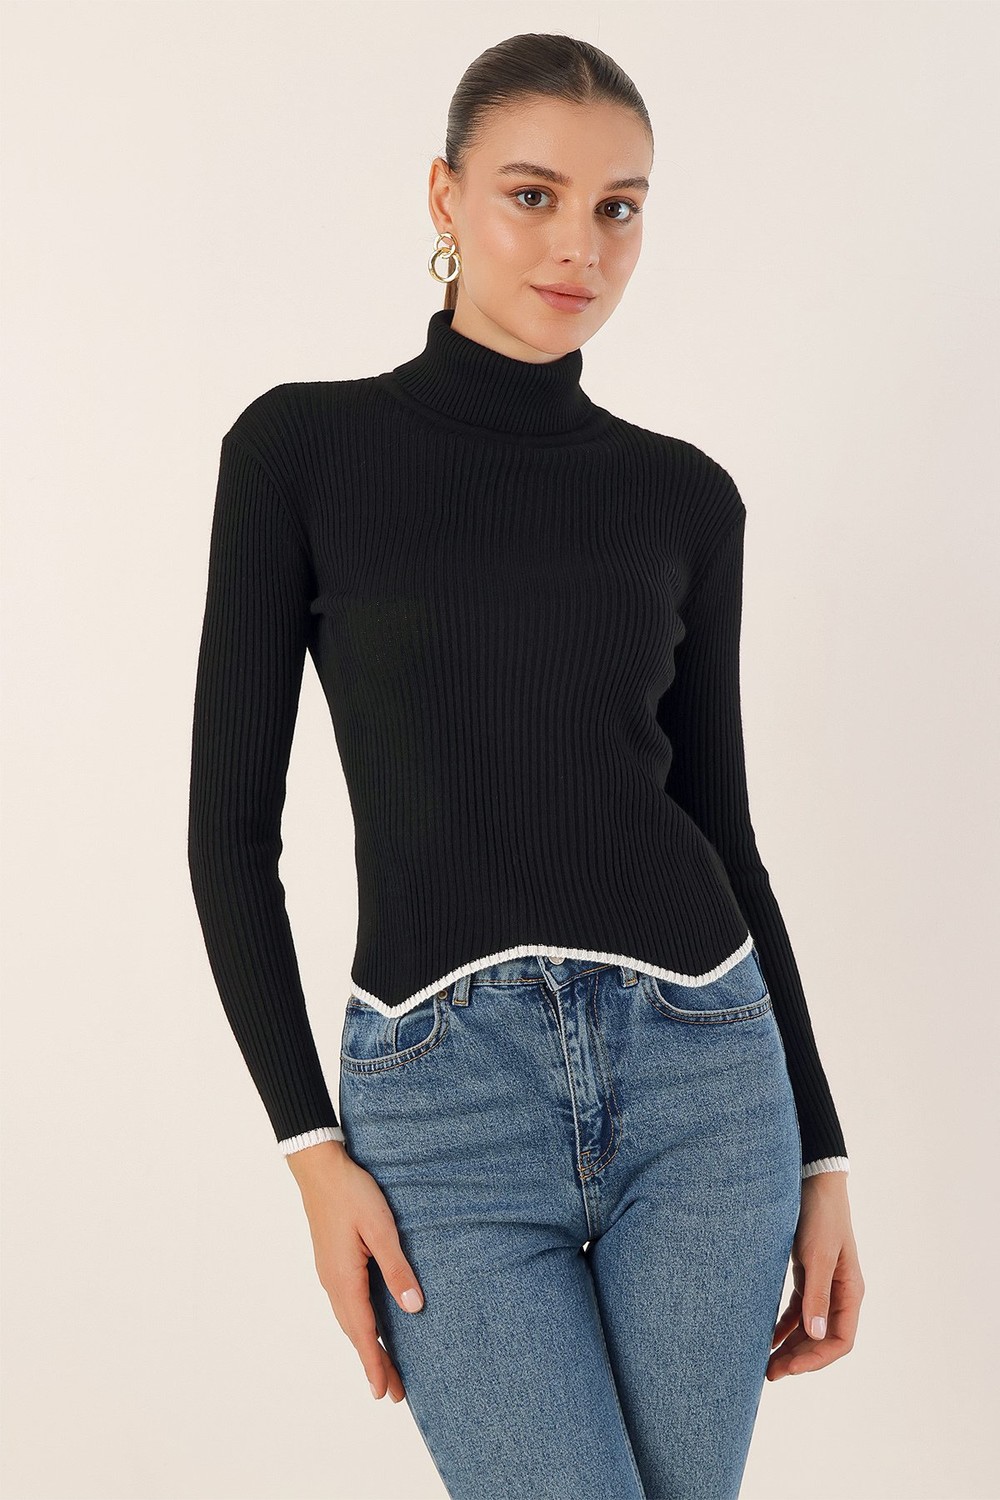 Bigdart 15823 Turtleneck Knitwear Sweater - Black